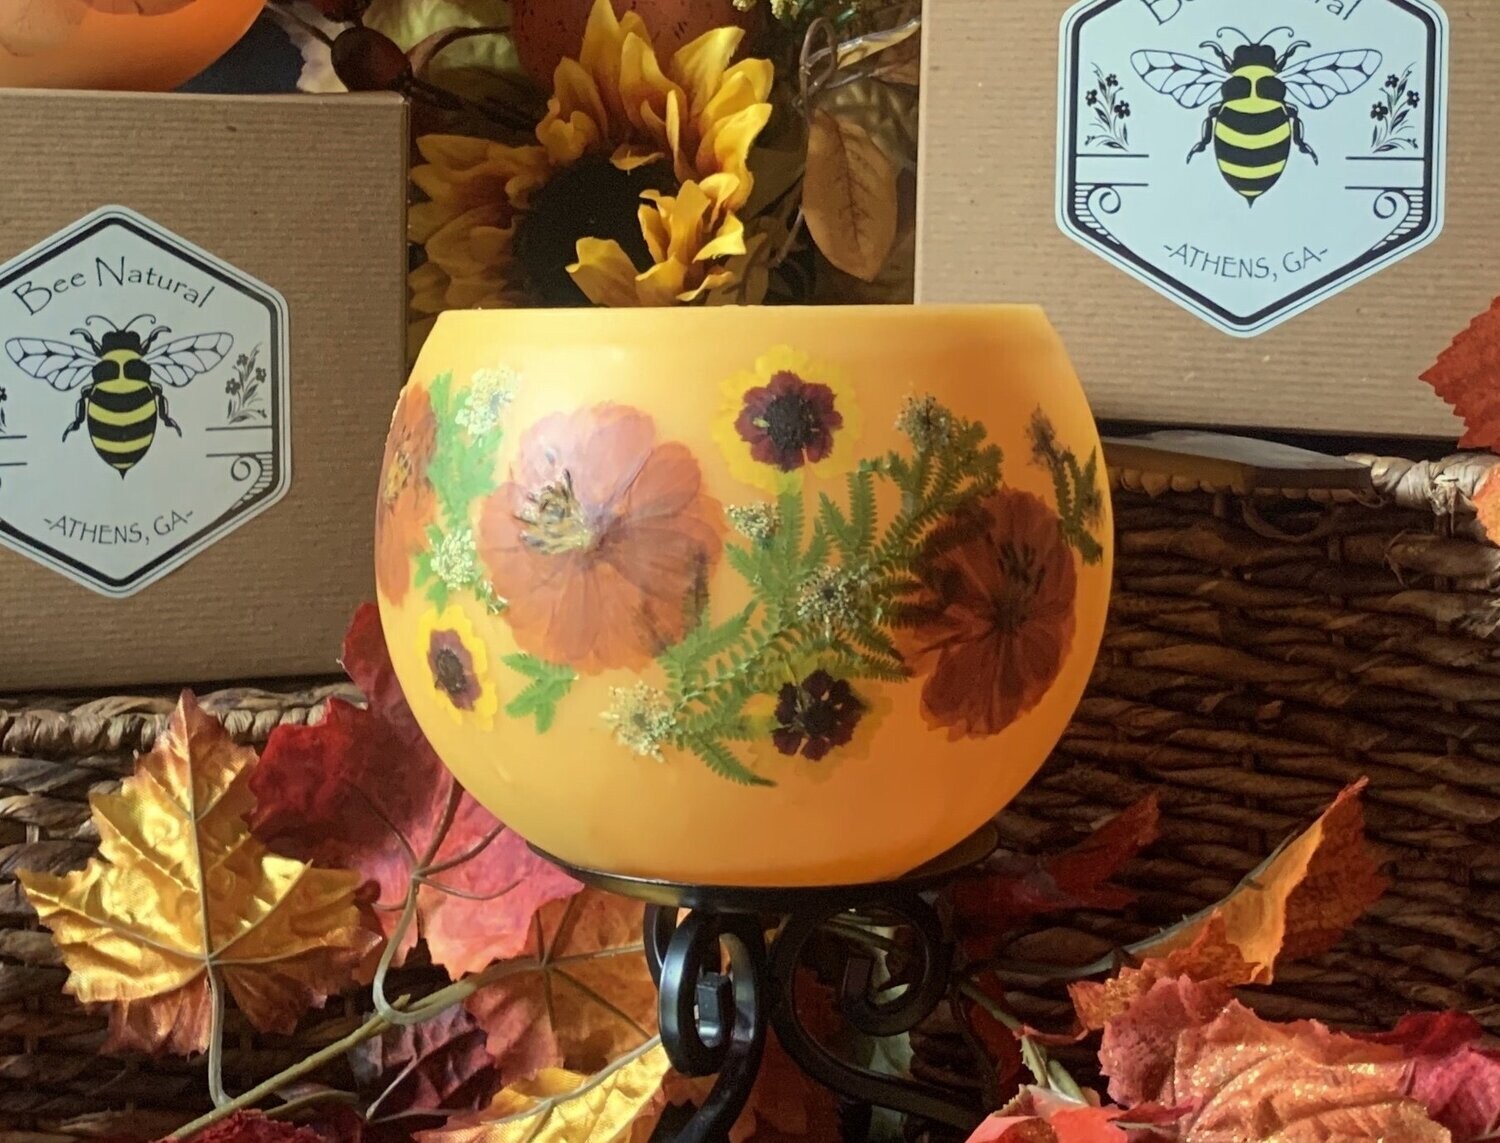 Bee Natural - Honeypot Beeswax Luminaries - Athens, GA